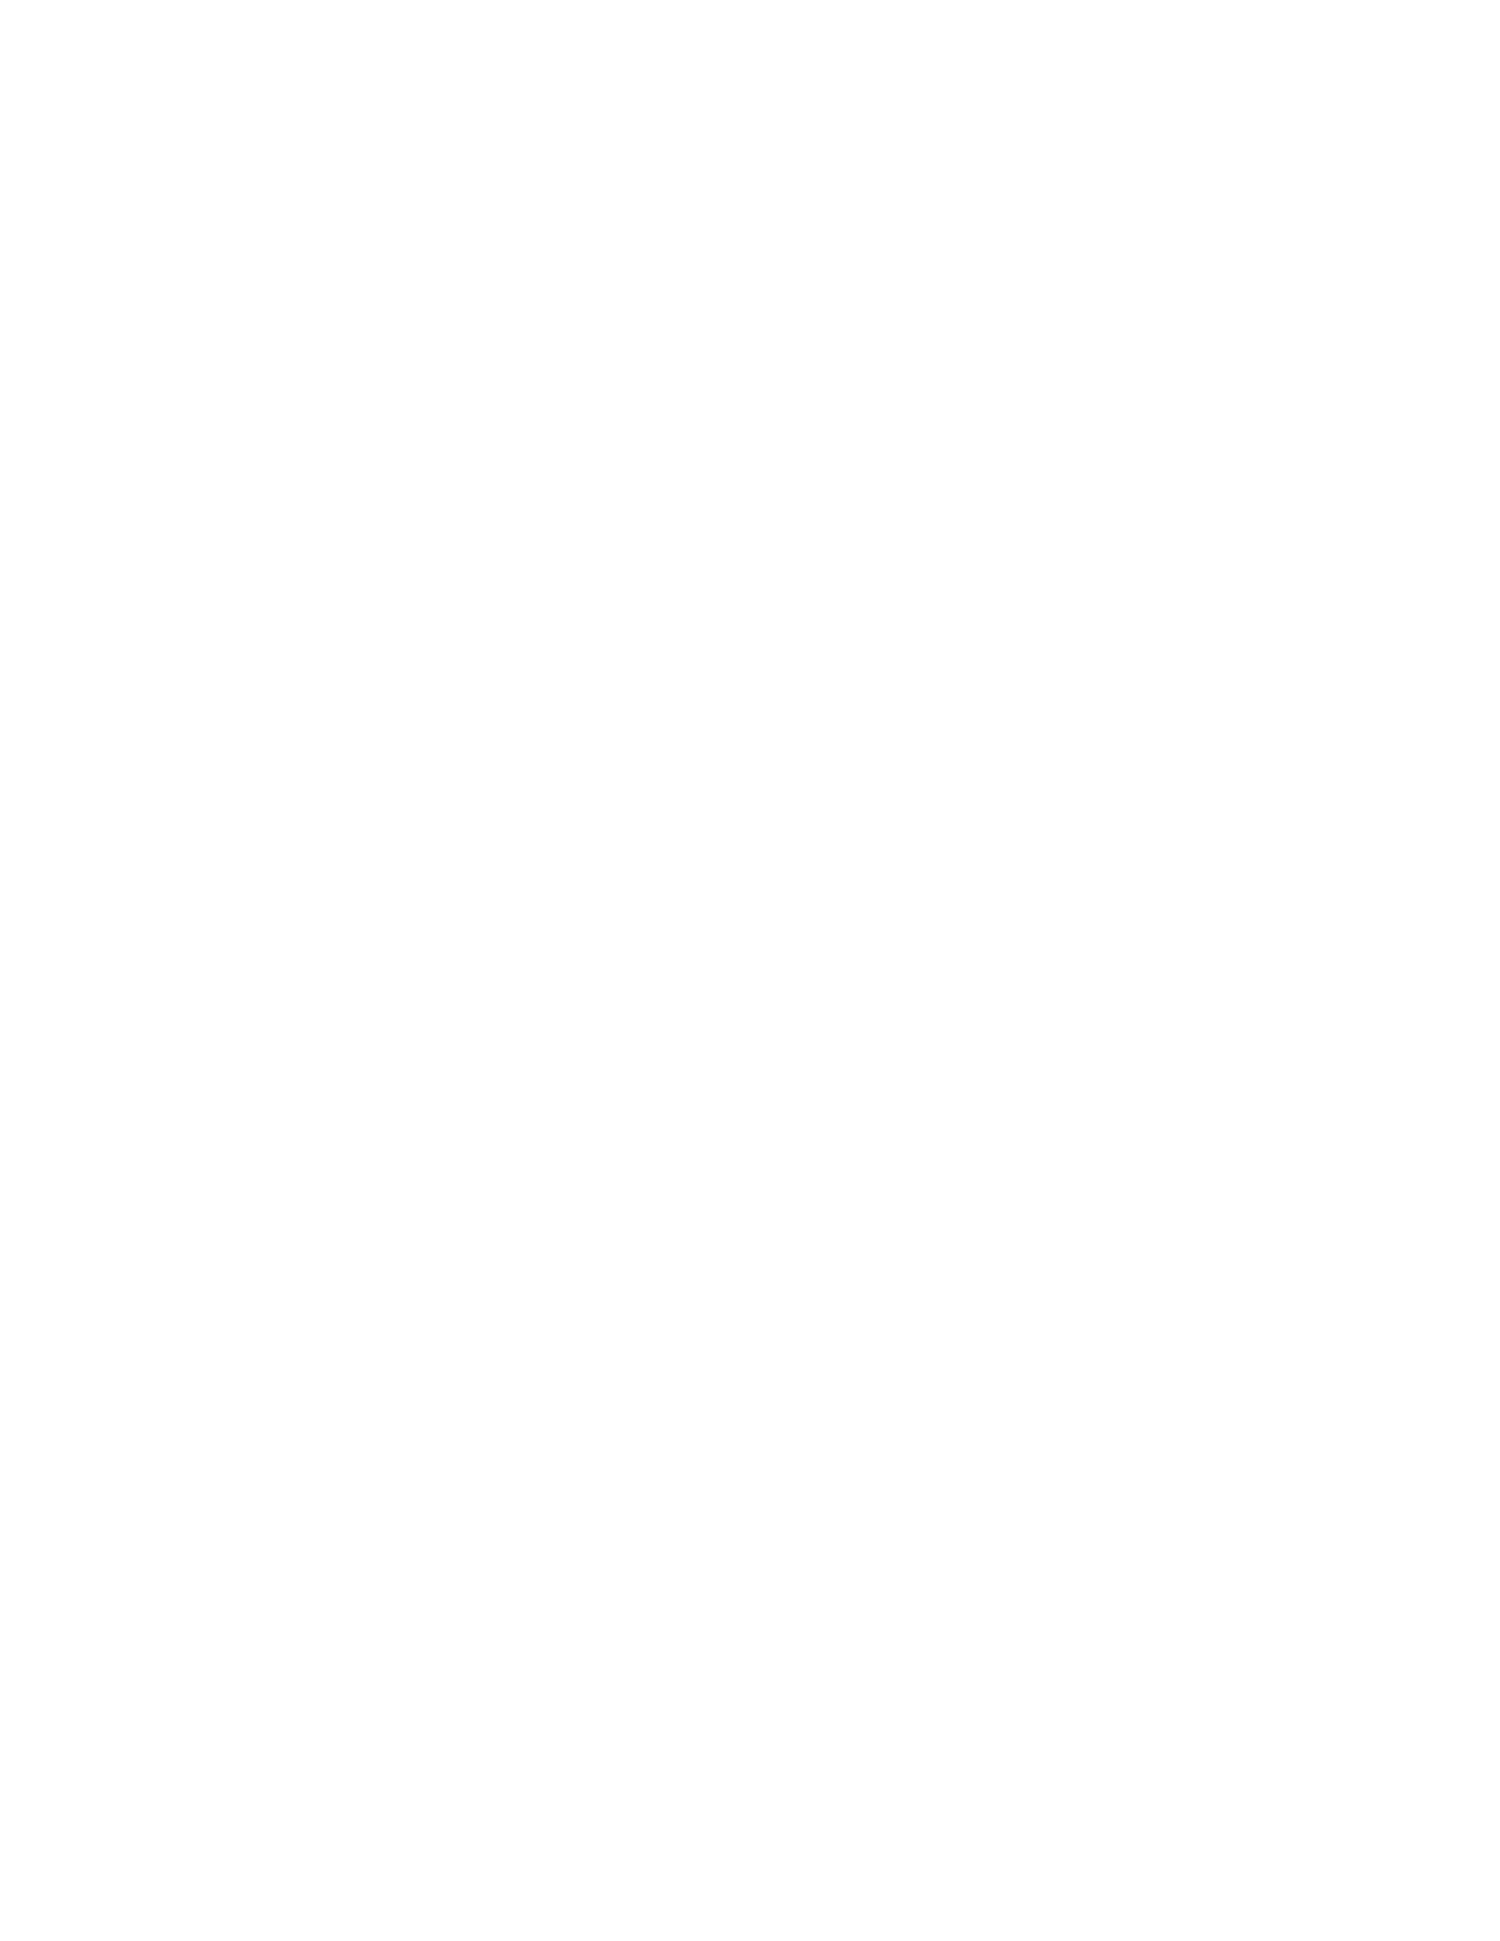 Protect Animals Worldwide